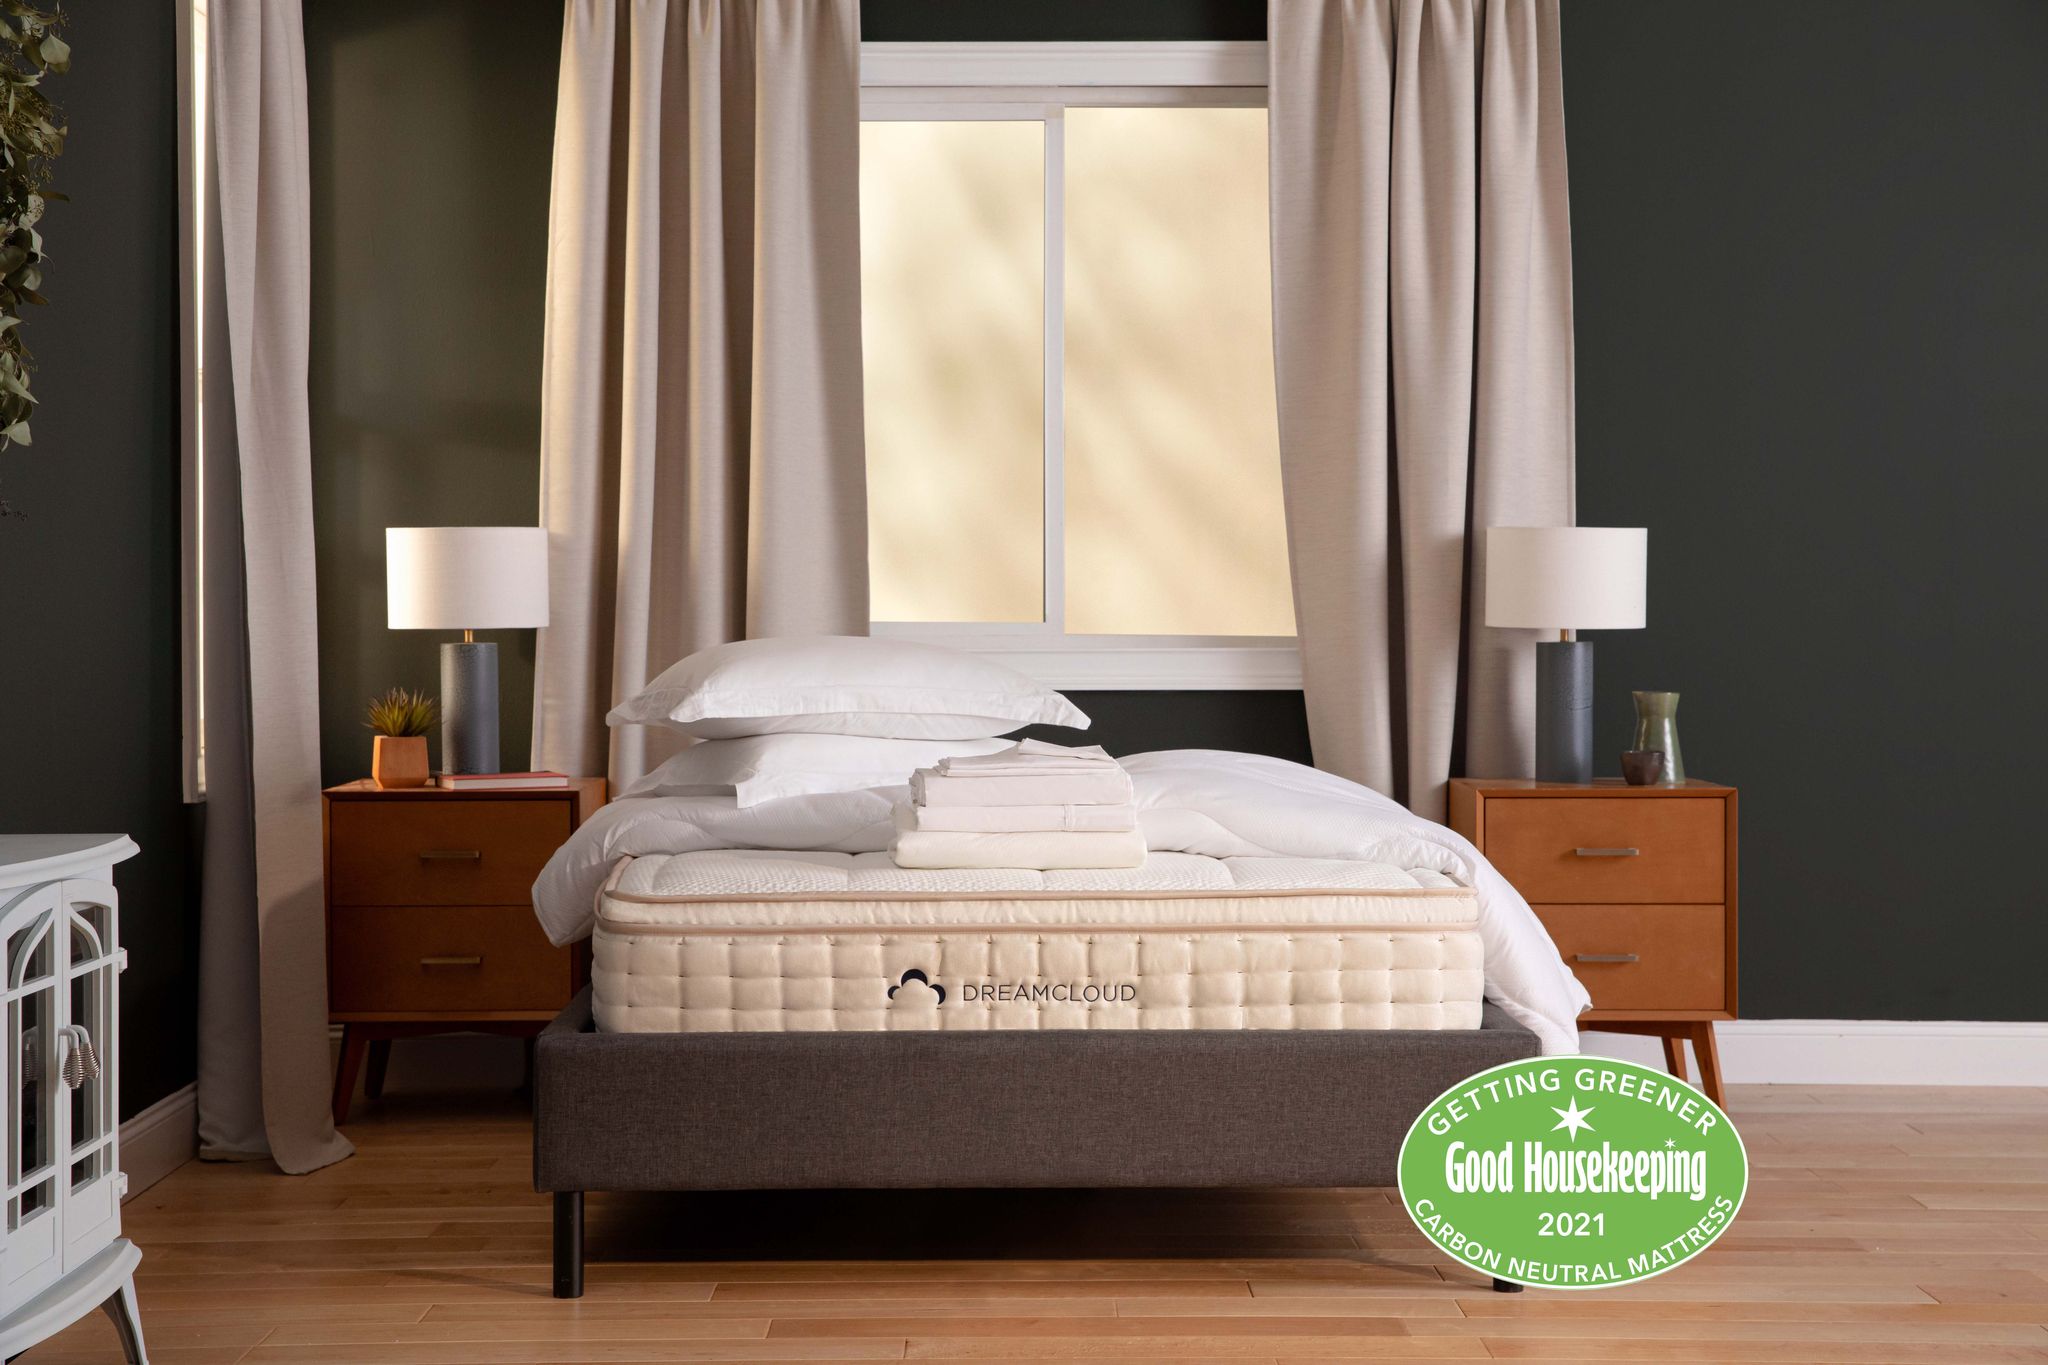 dreamcloud getting greener, carbon neutral mattress, good housekeeping